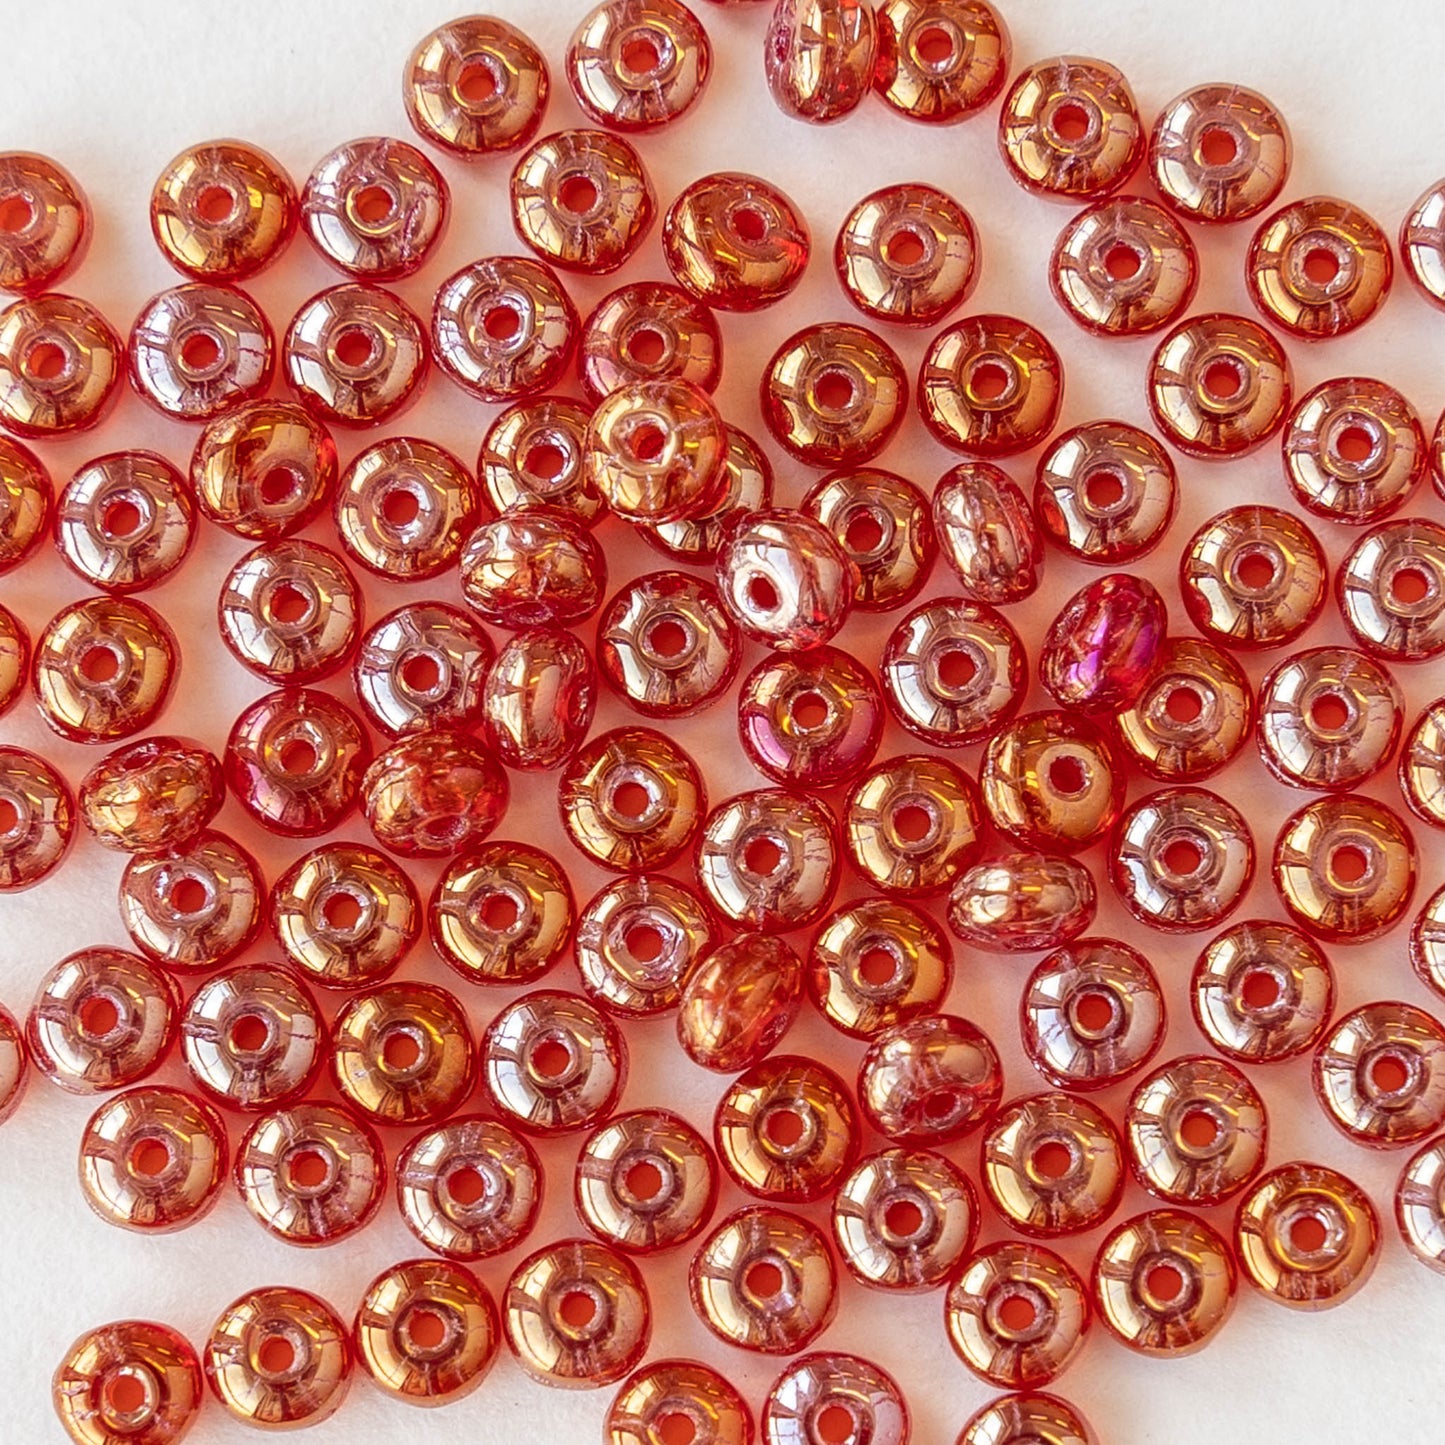 3mm Rondelle Beads - Ruby Iris Luster - 100 Beads